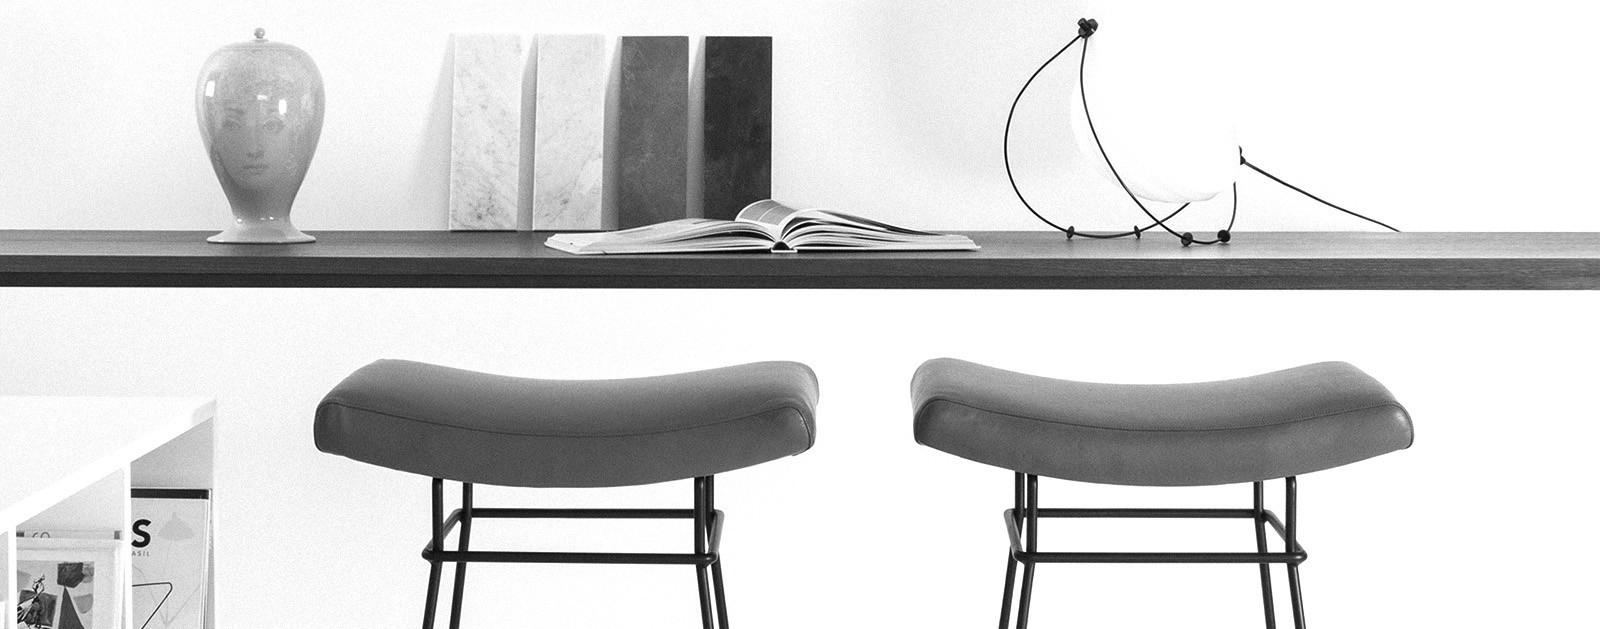 Bienal industrial bar stool - Objekto